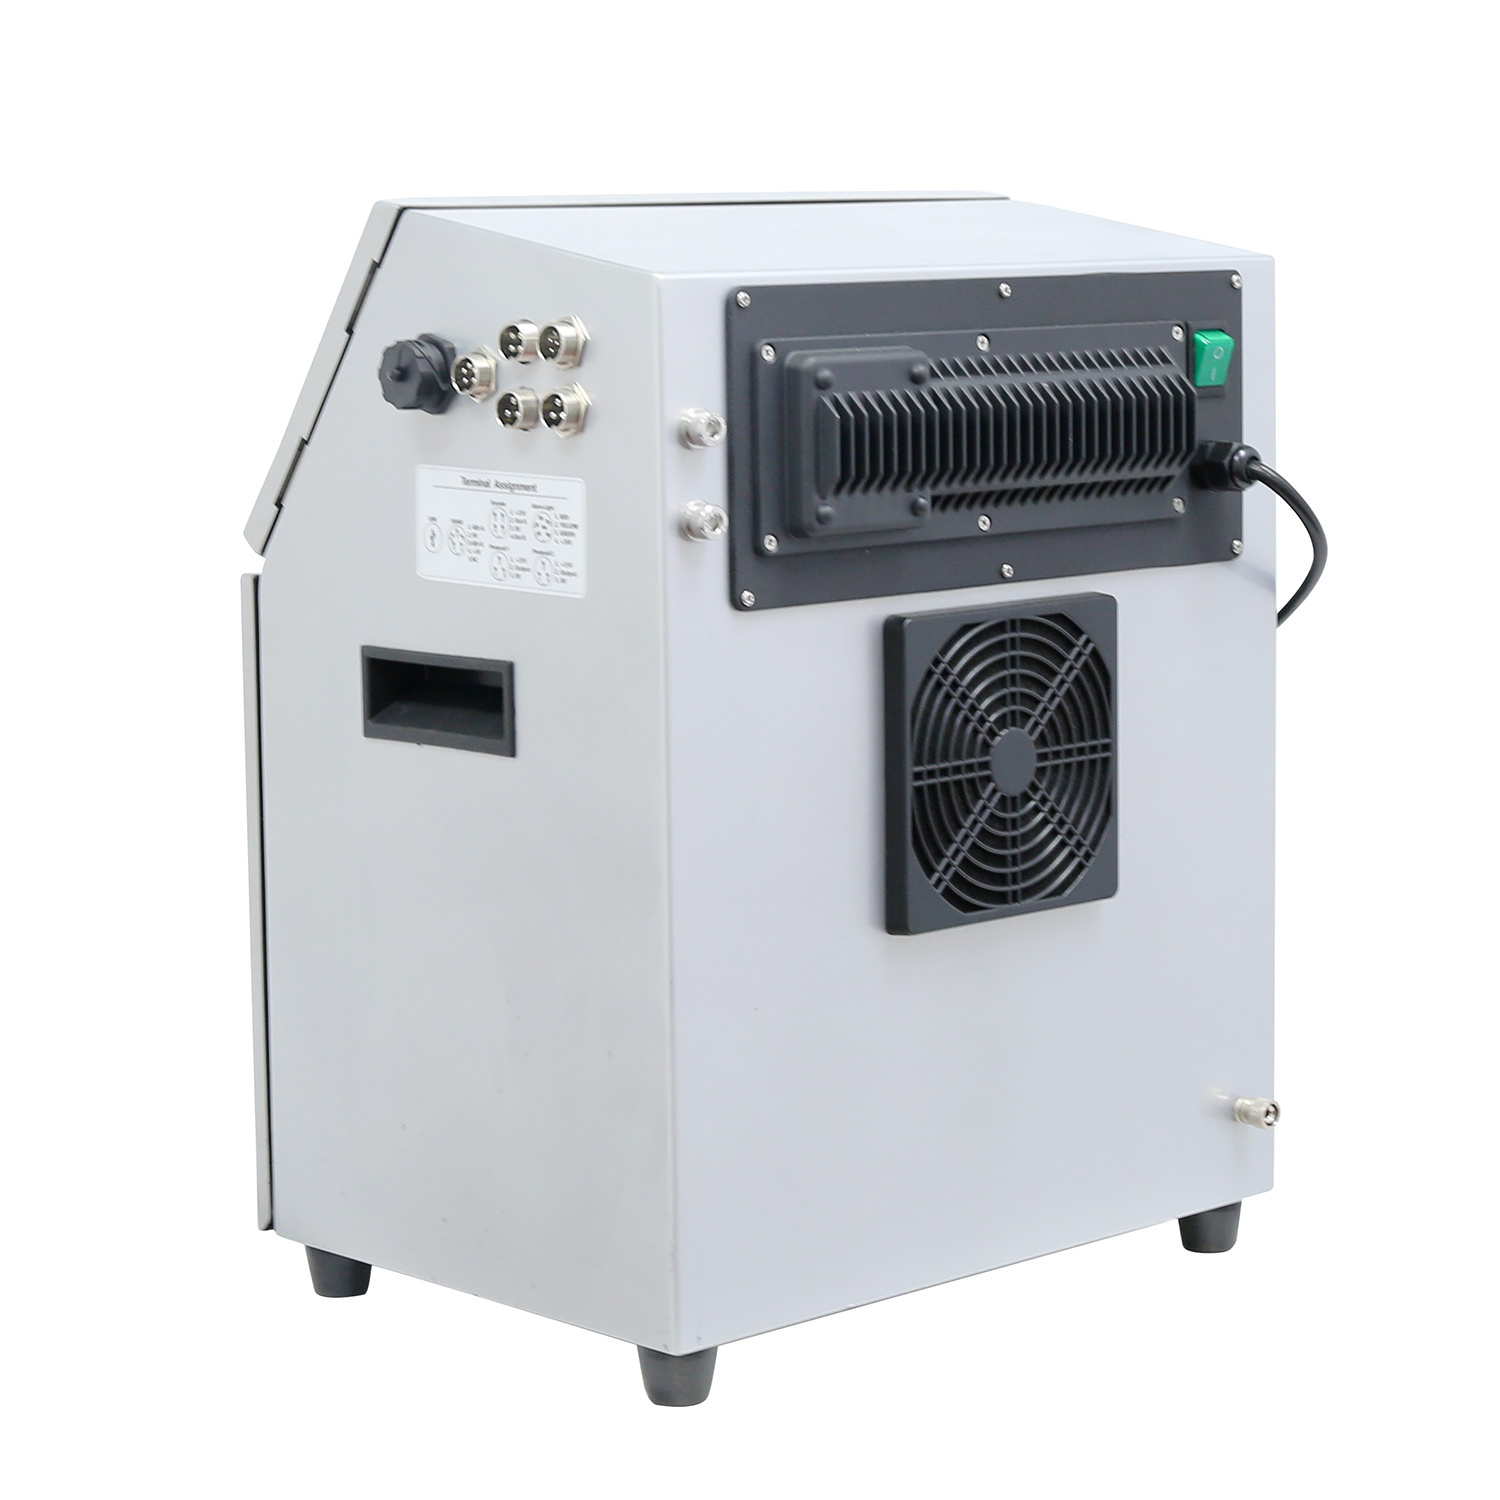 Lead Tech Lt800 Code Printing Machine Inkjet Printer